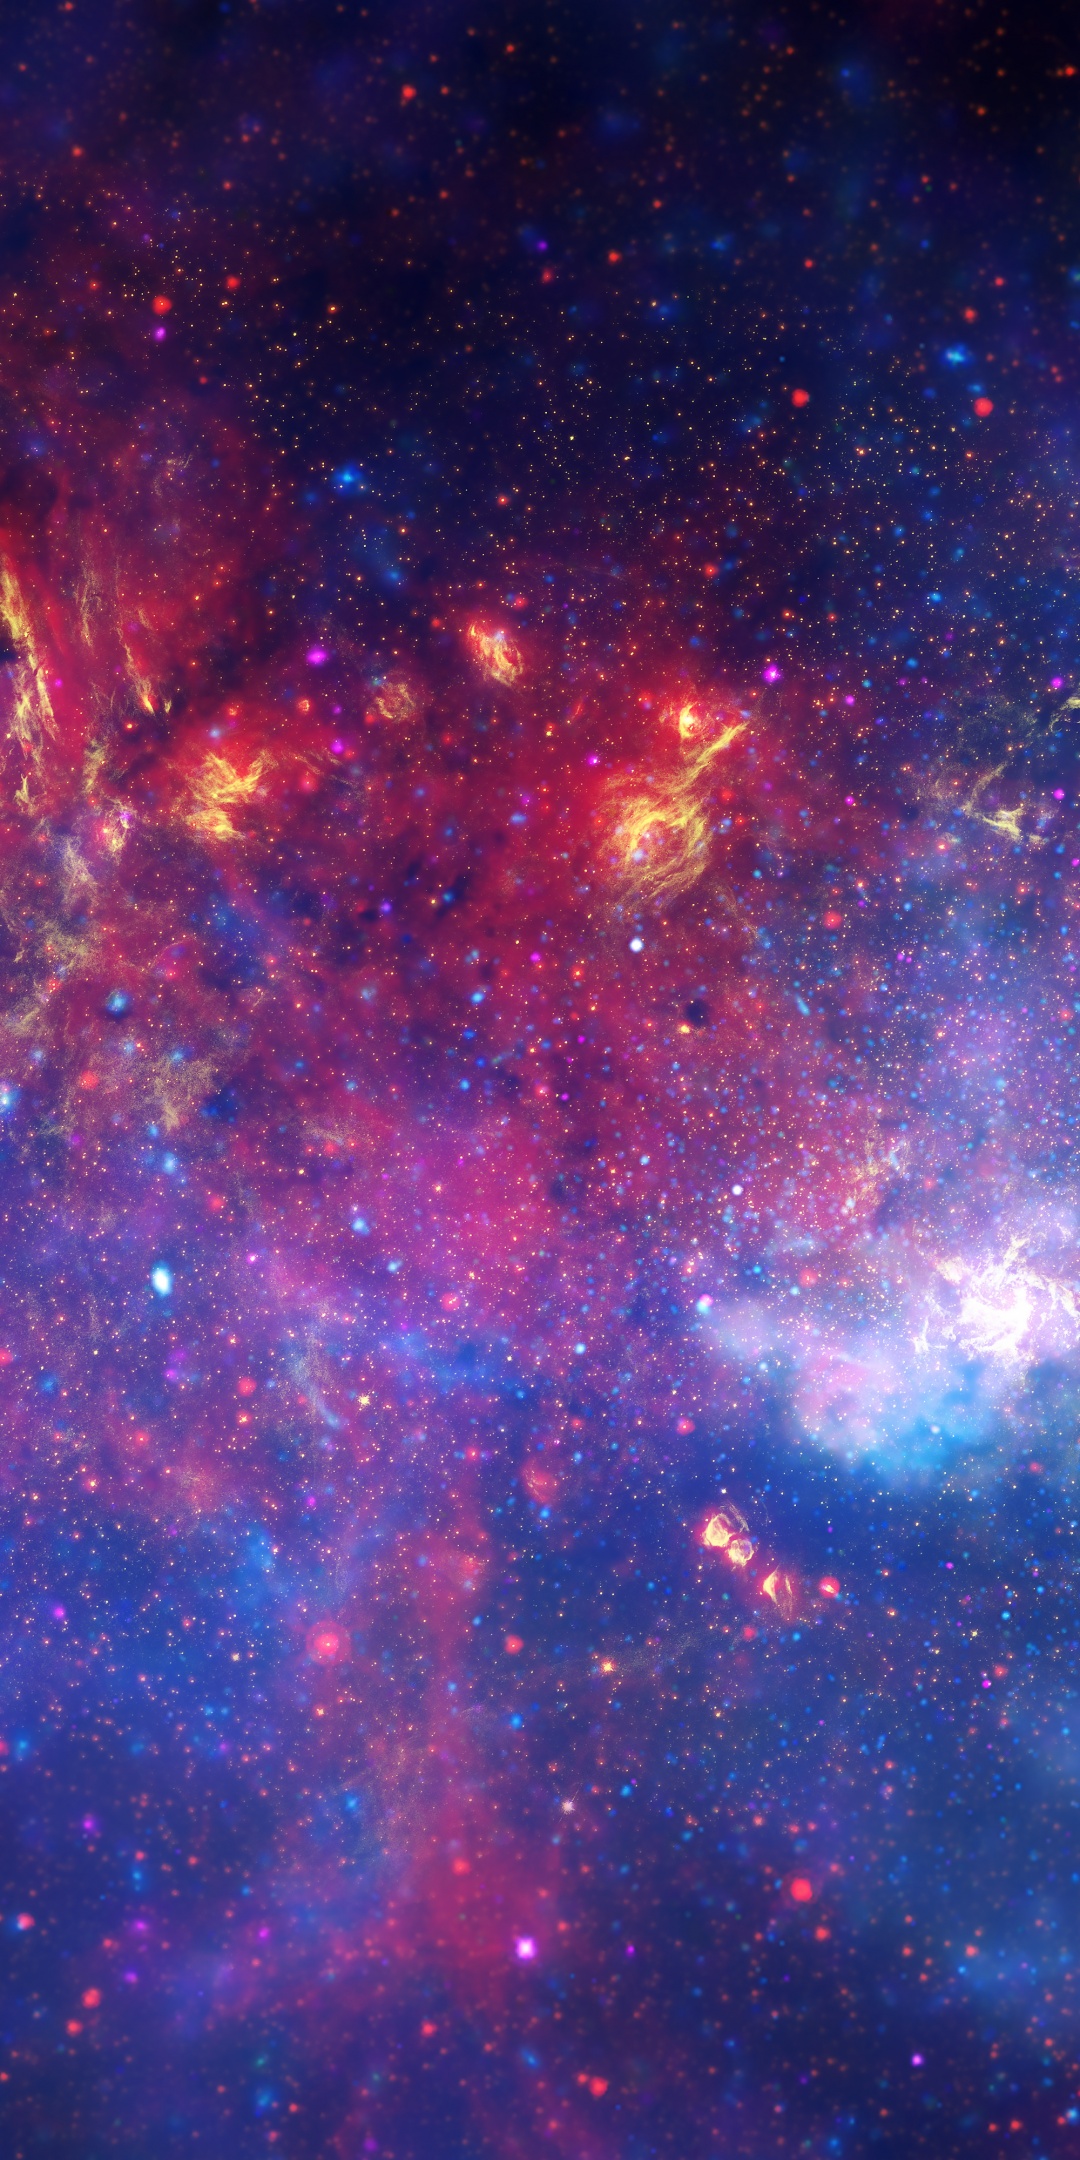 Galactic Center 4K Wallpaper, Cosmology, Star Birth, Black hole